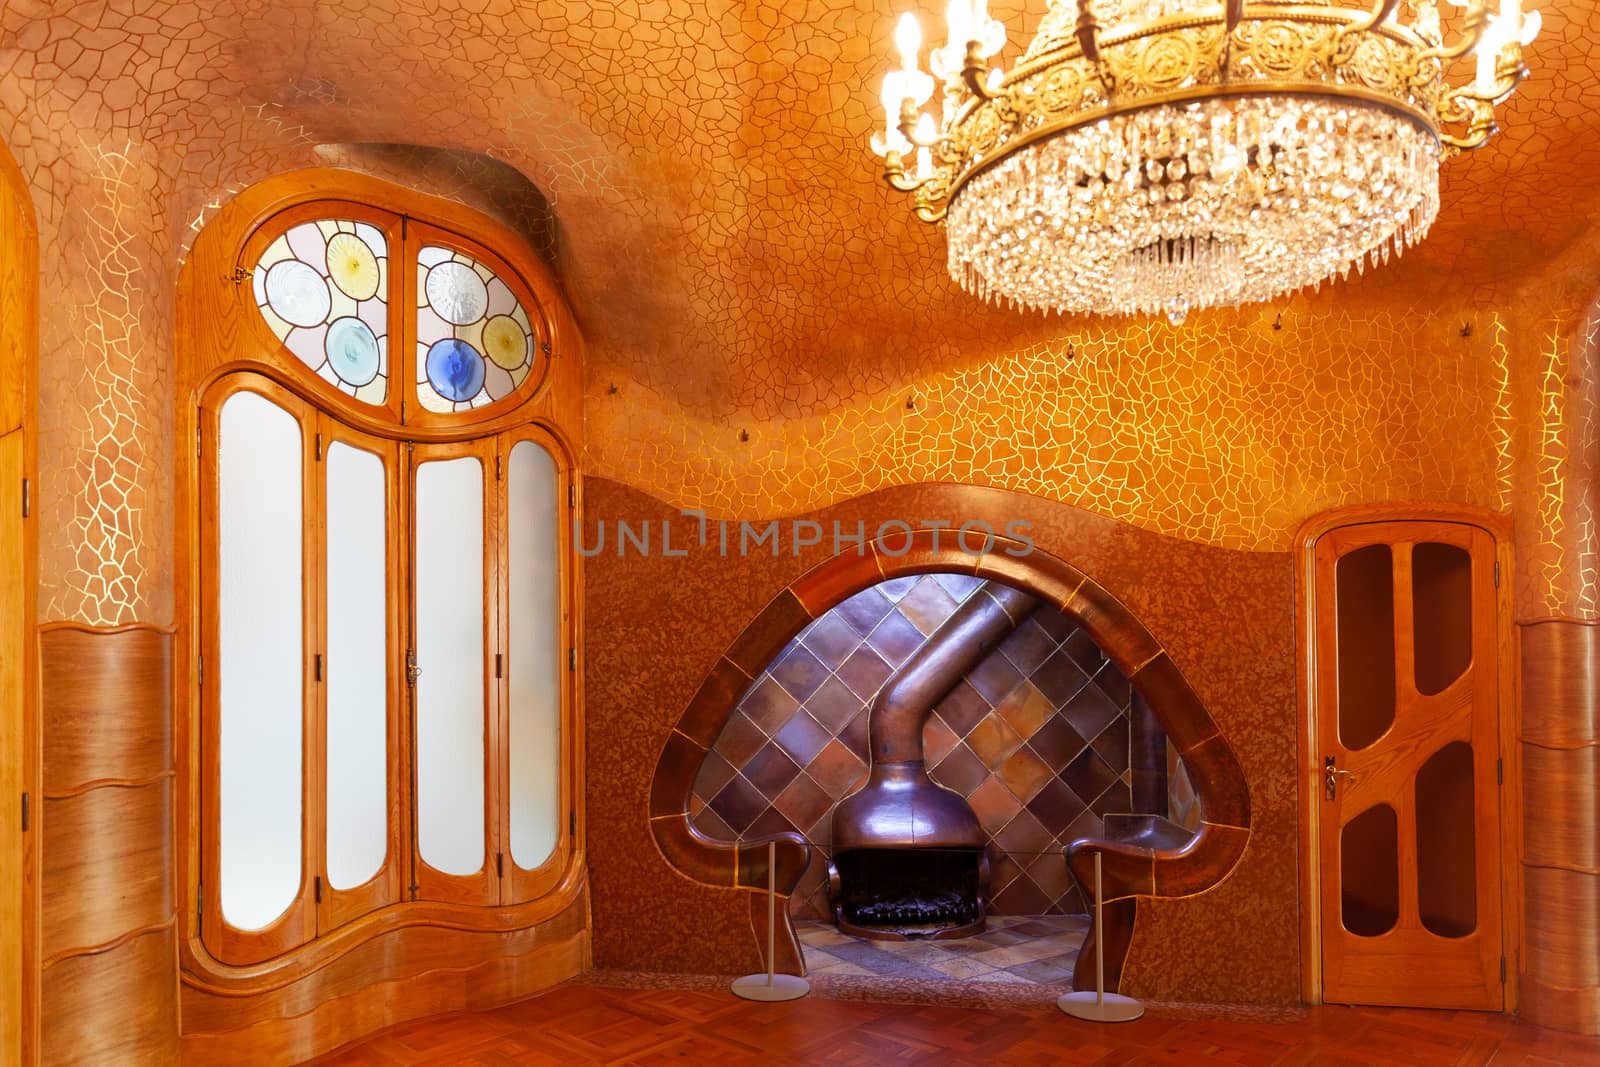 Casa Batllo entrance fireplace, Barcelona, Spain by vlad-m